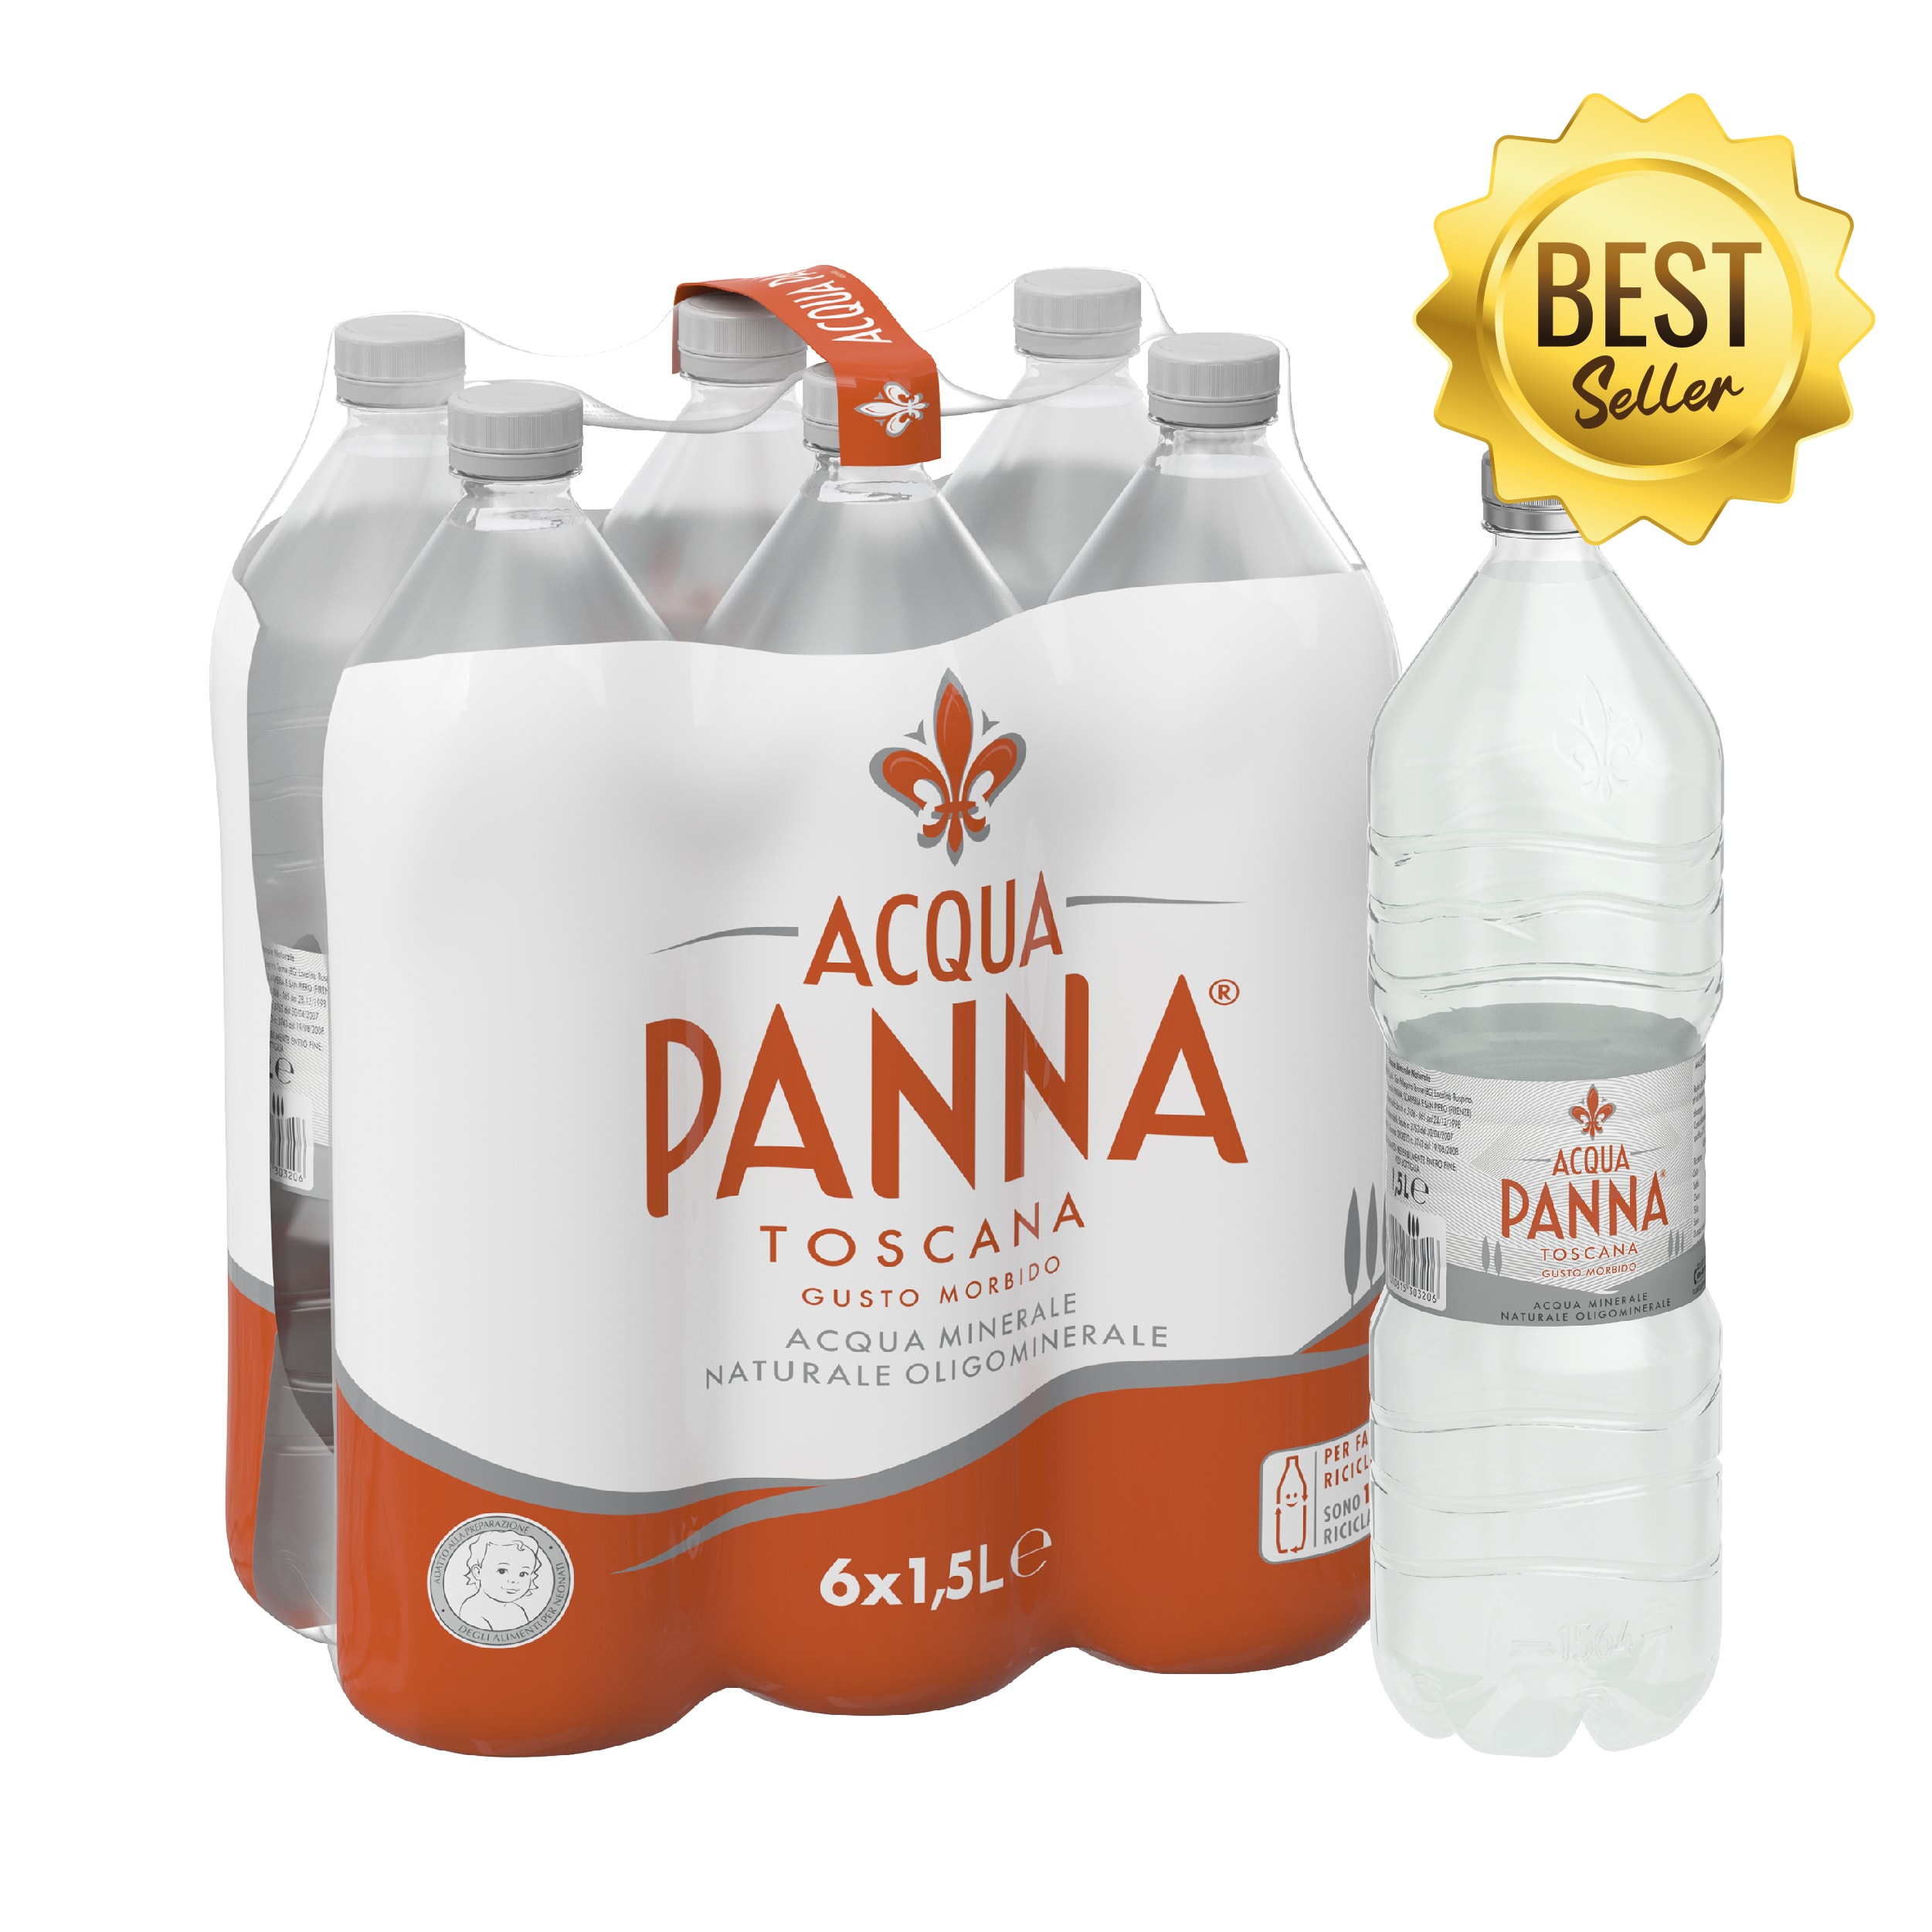 Acqua Panna (Still Bottled Water)